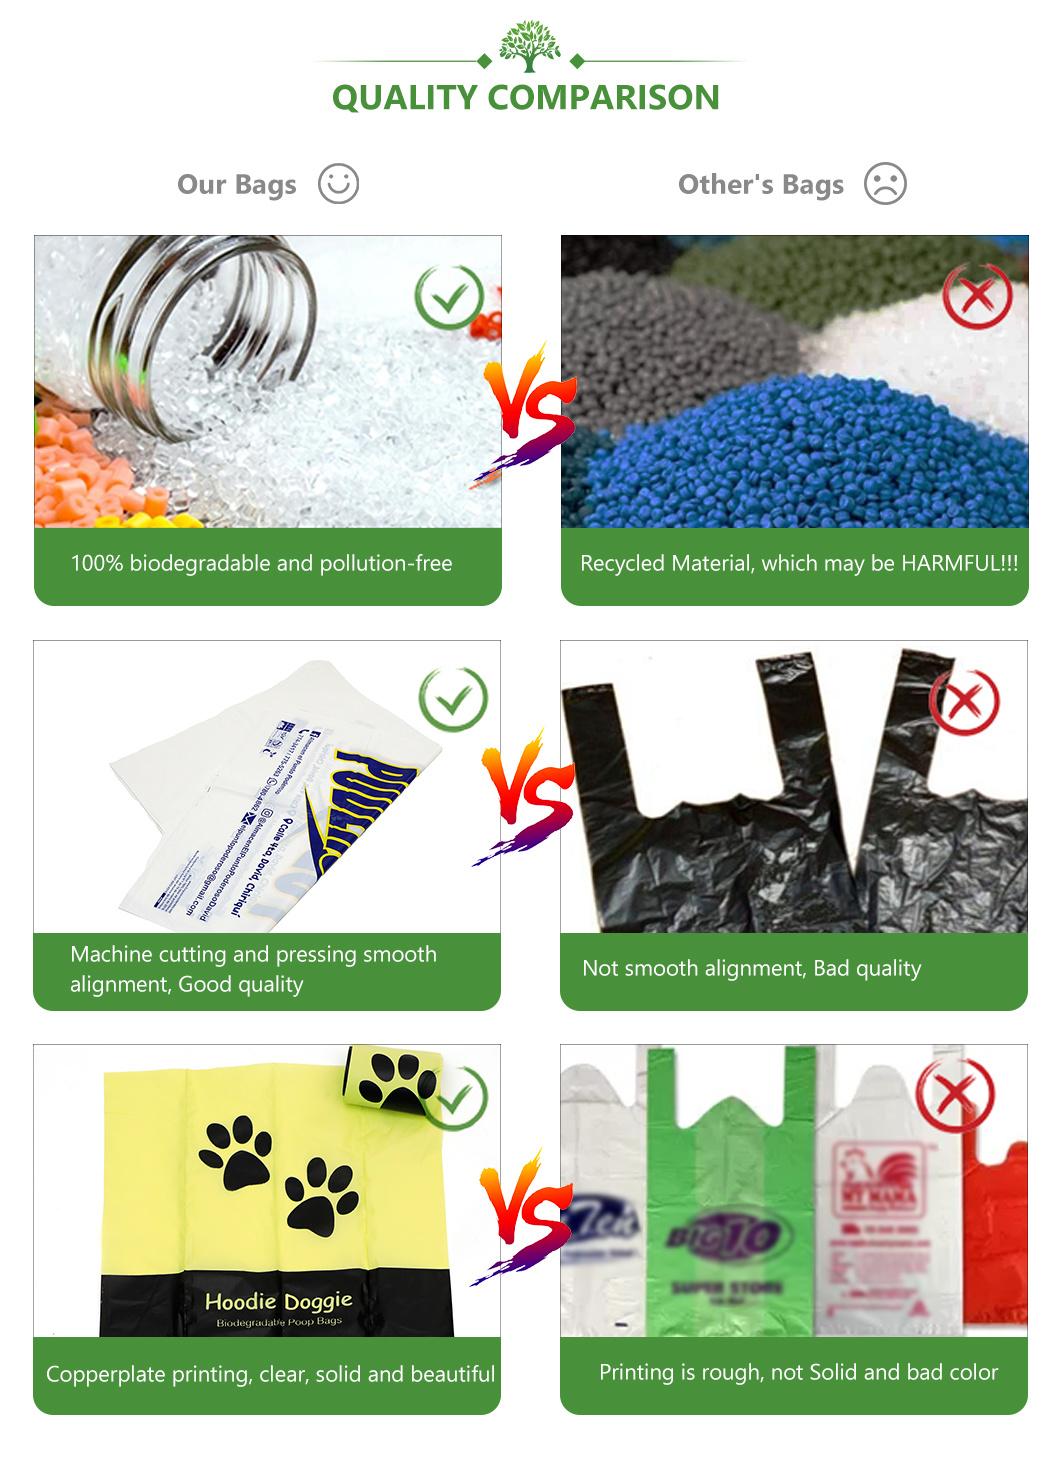 PLA+Pbat/Pbat+Corn Starch Biodegradable Bags, Compostable Bags, Food Bags for Home